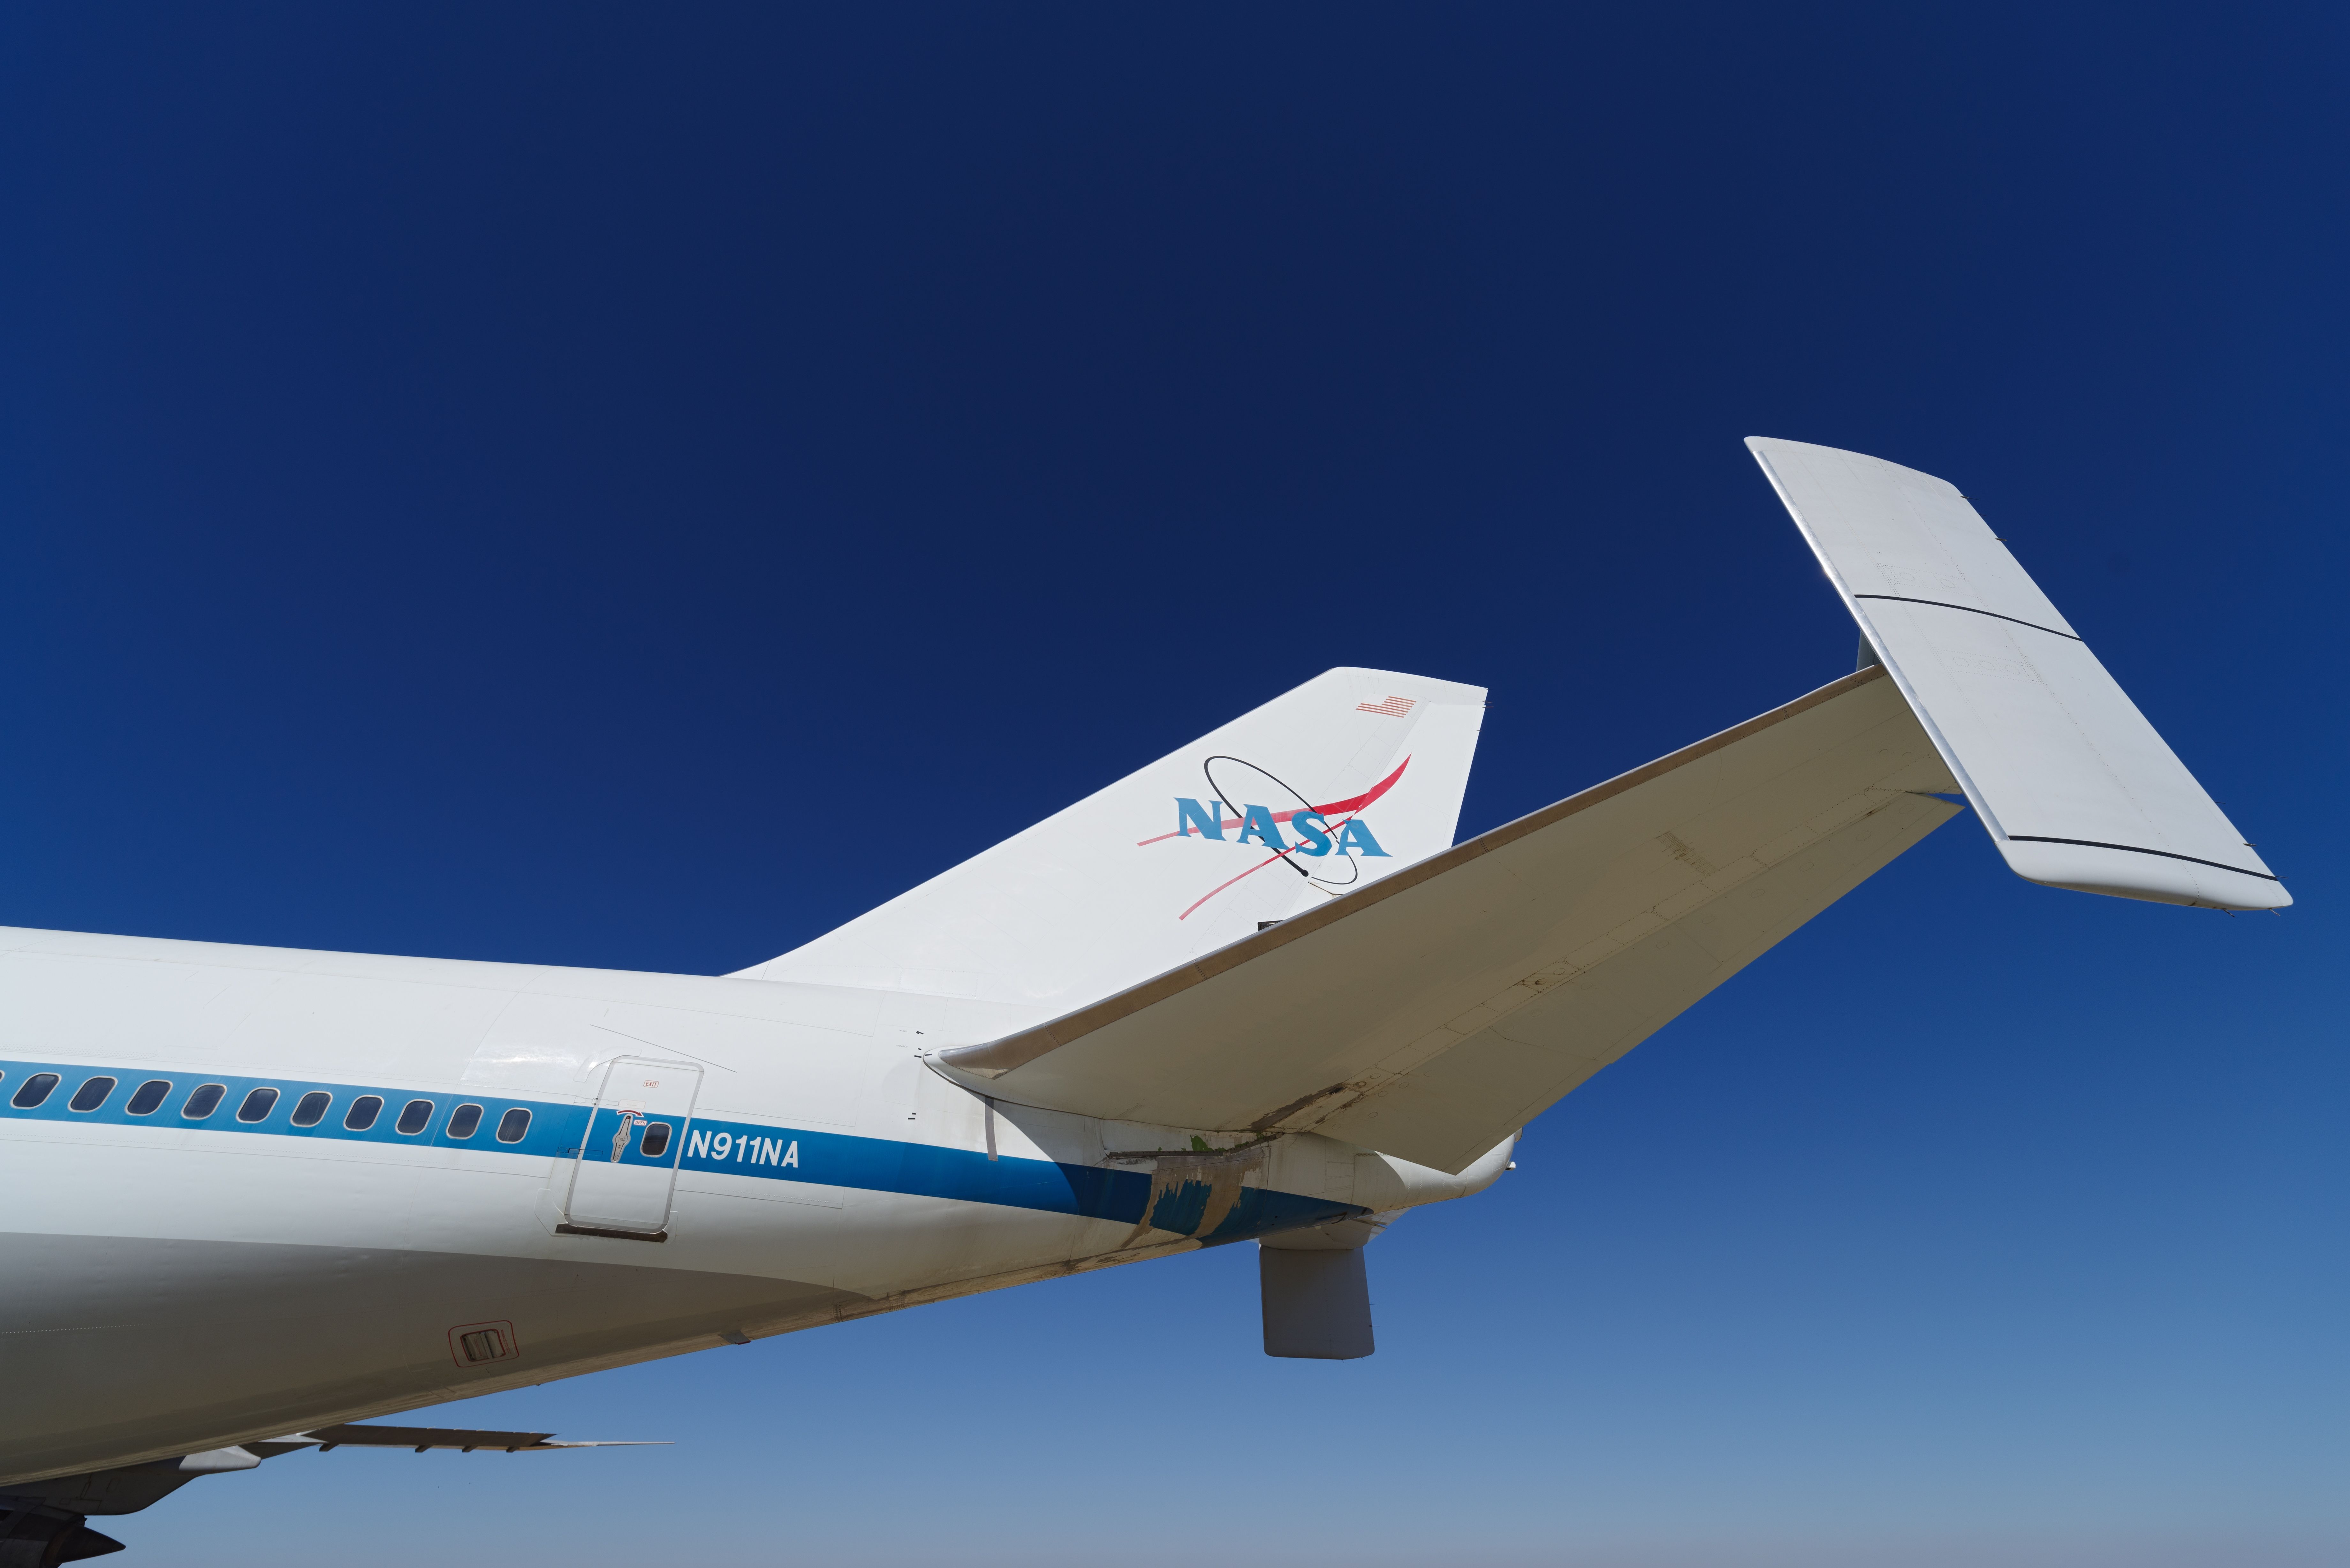 shuttle carrier nasa tail